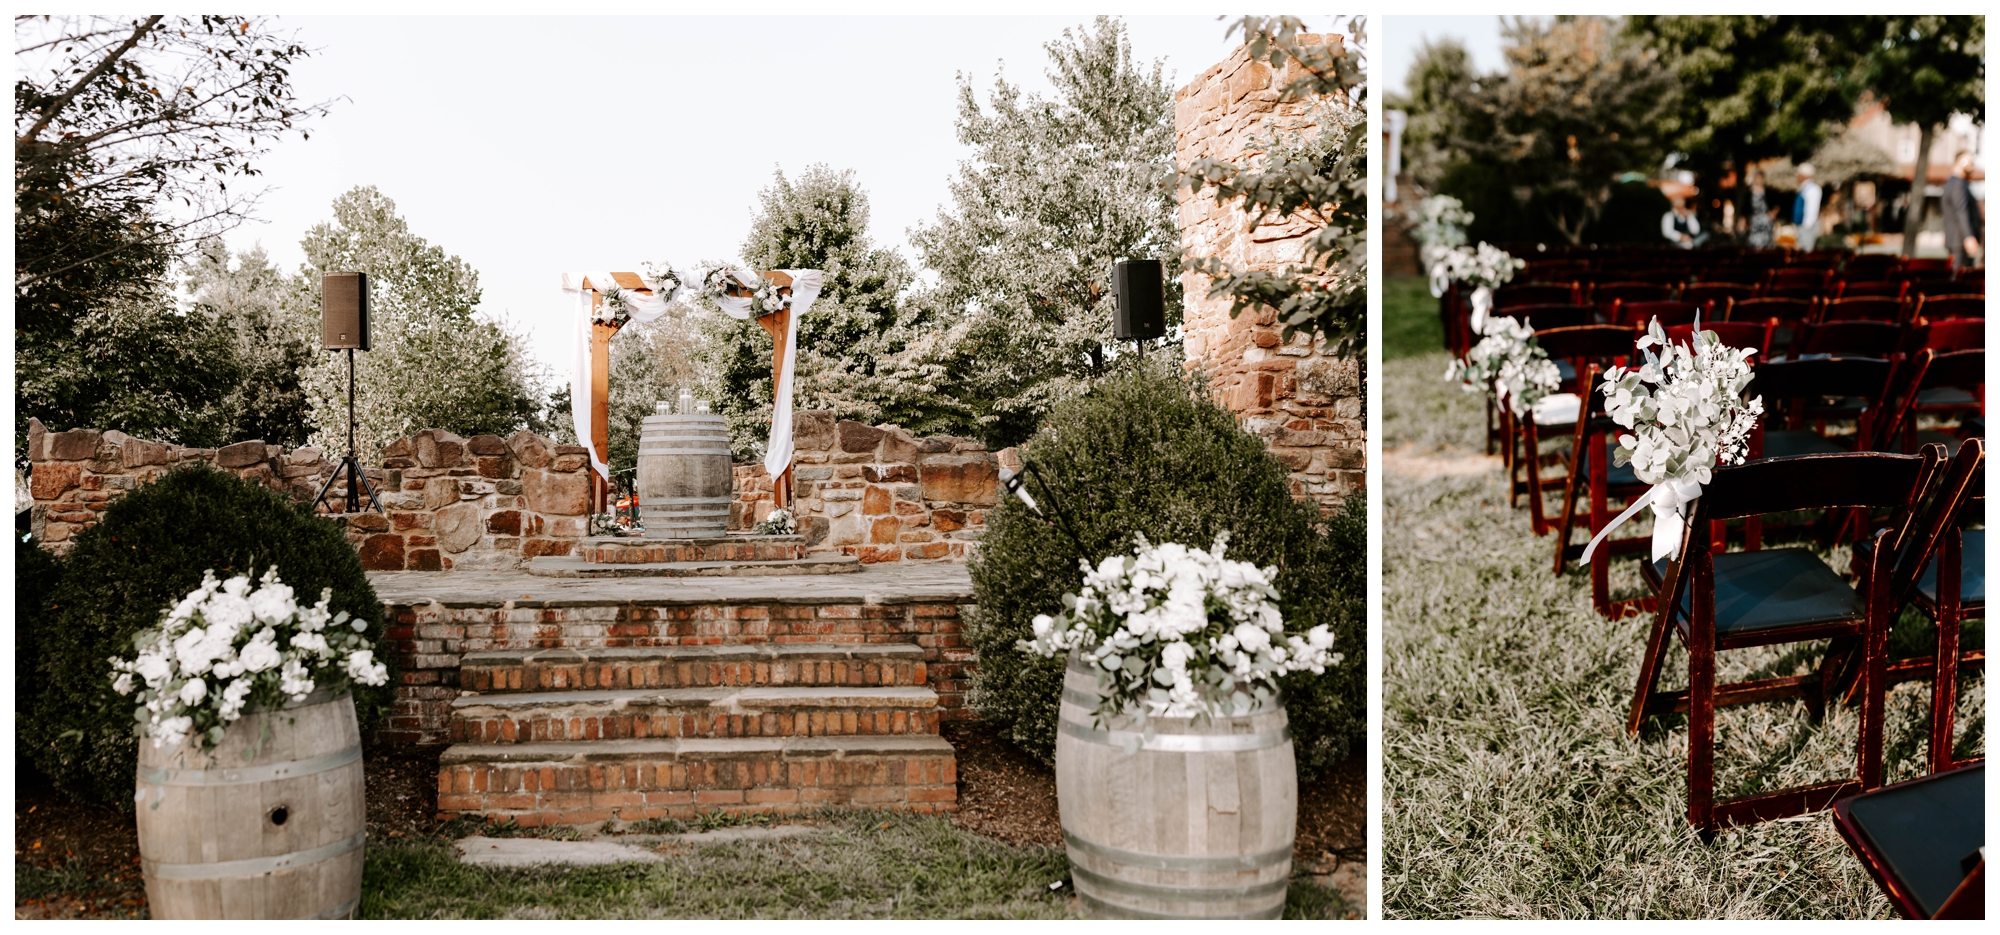 Mansion Ruins wedding ceremony at Winery at Bull Run, VA